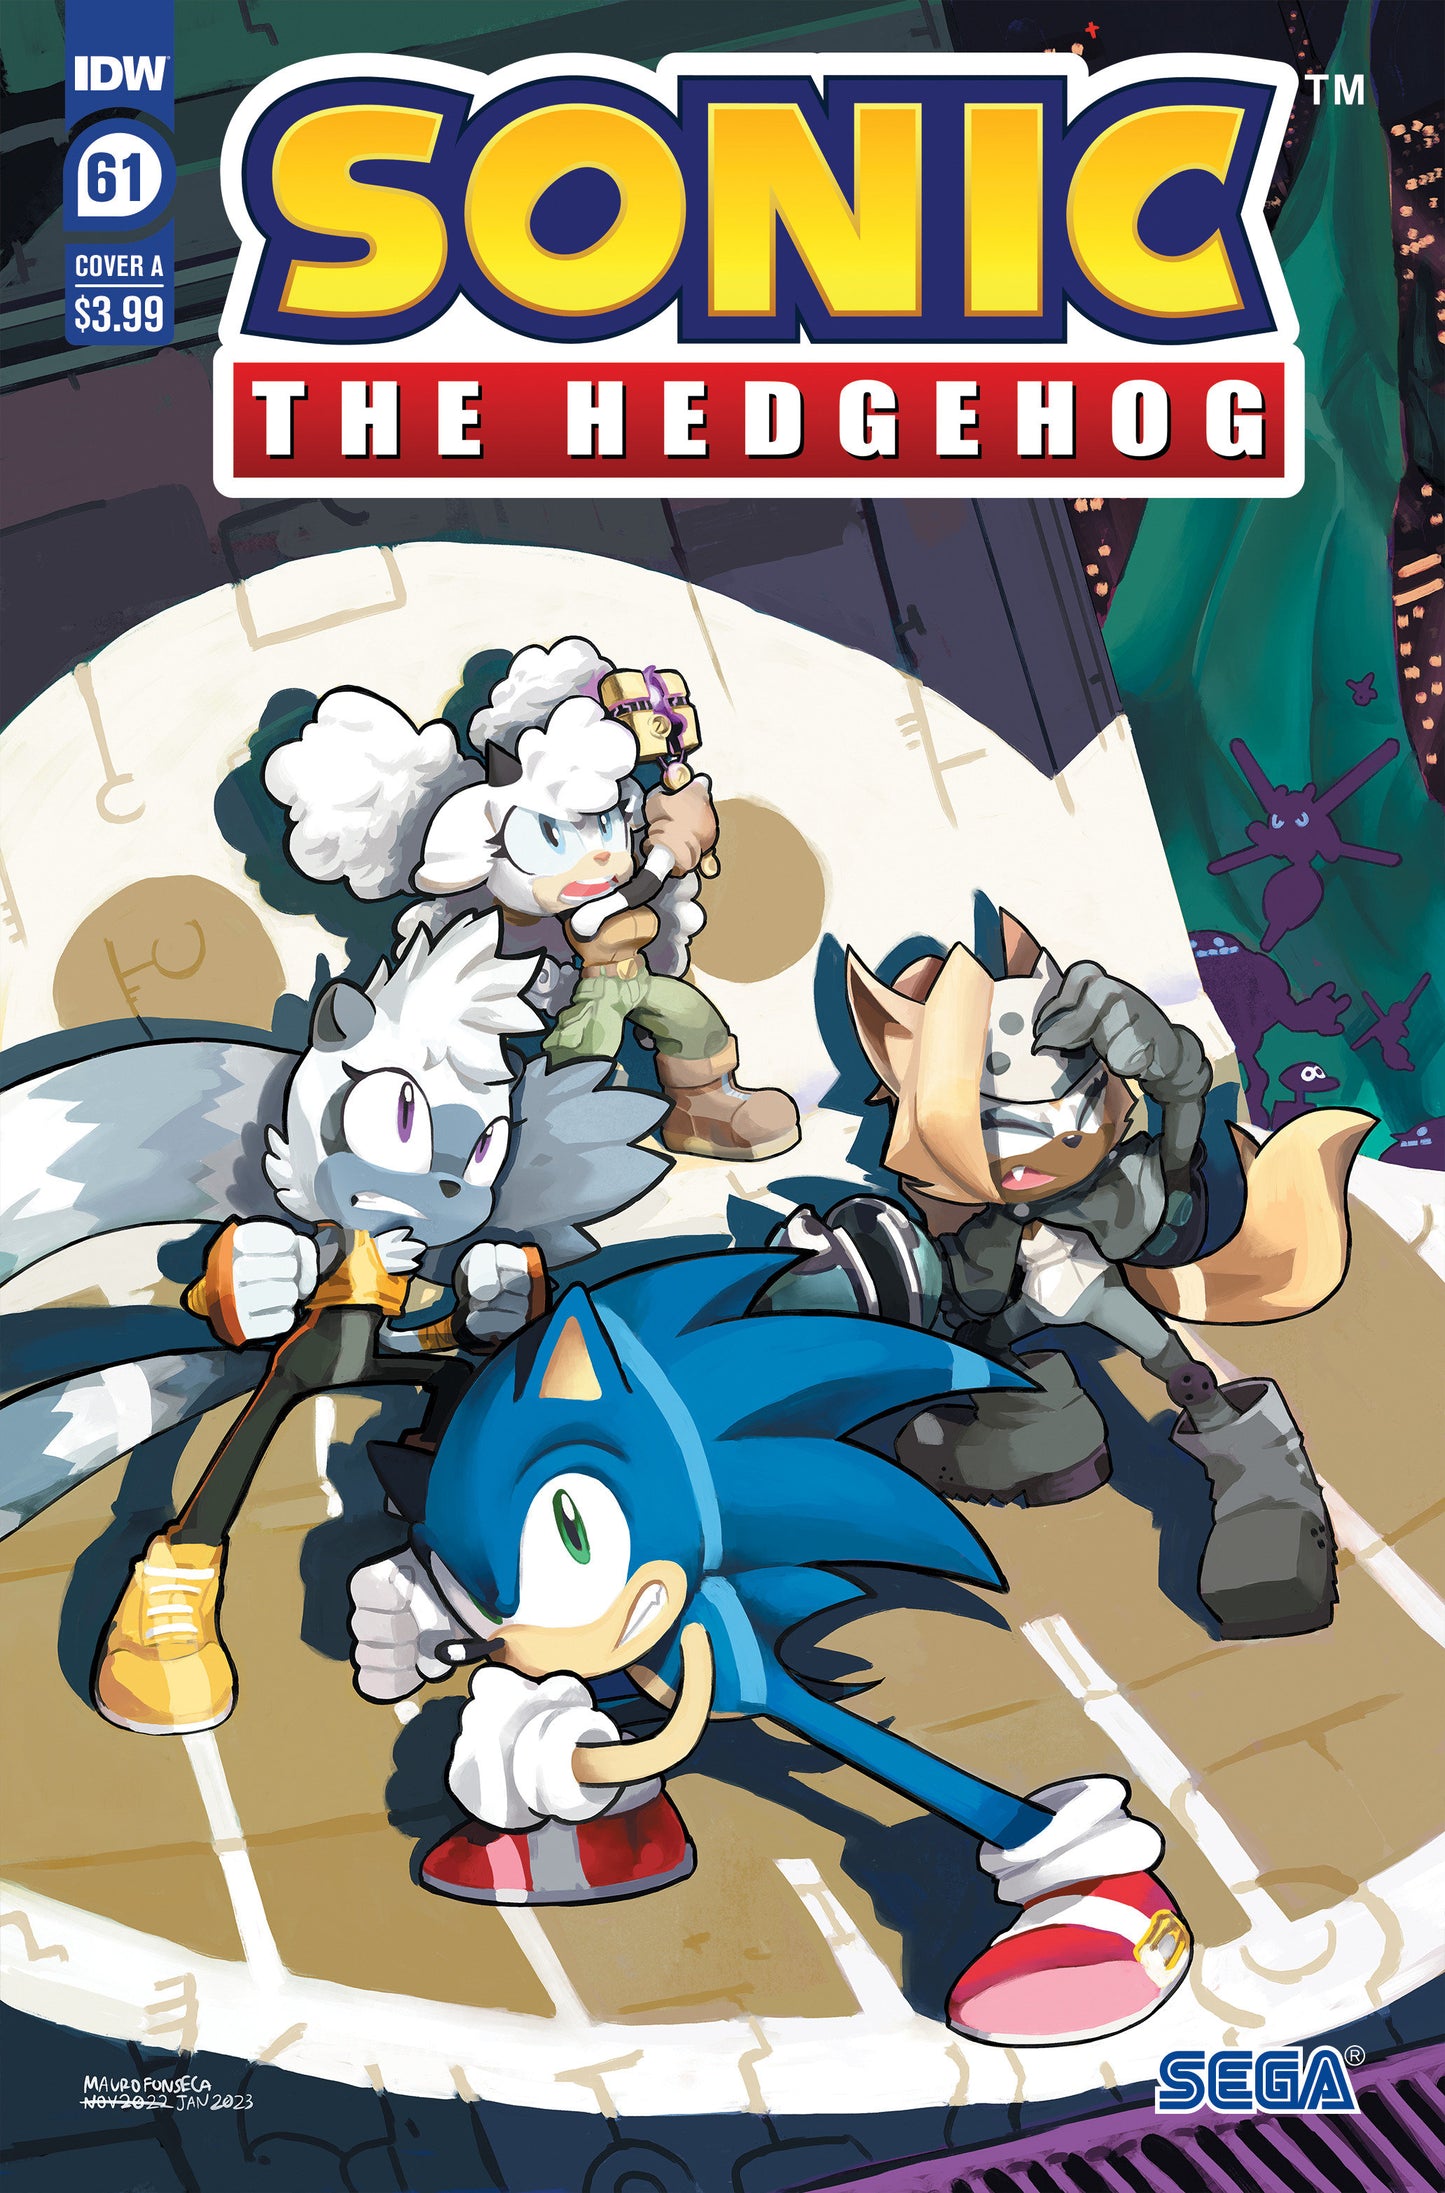 Sonic The Hedgehog #61 Cover A (Fonseca)